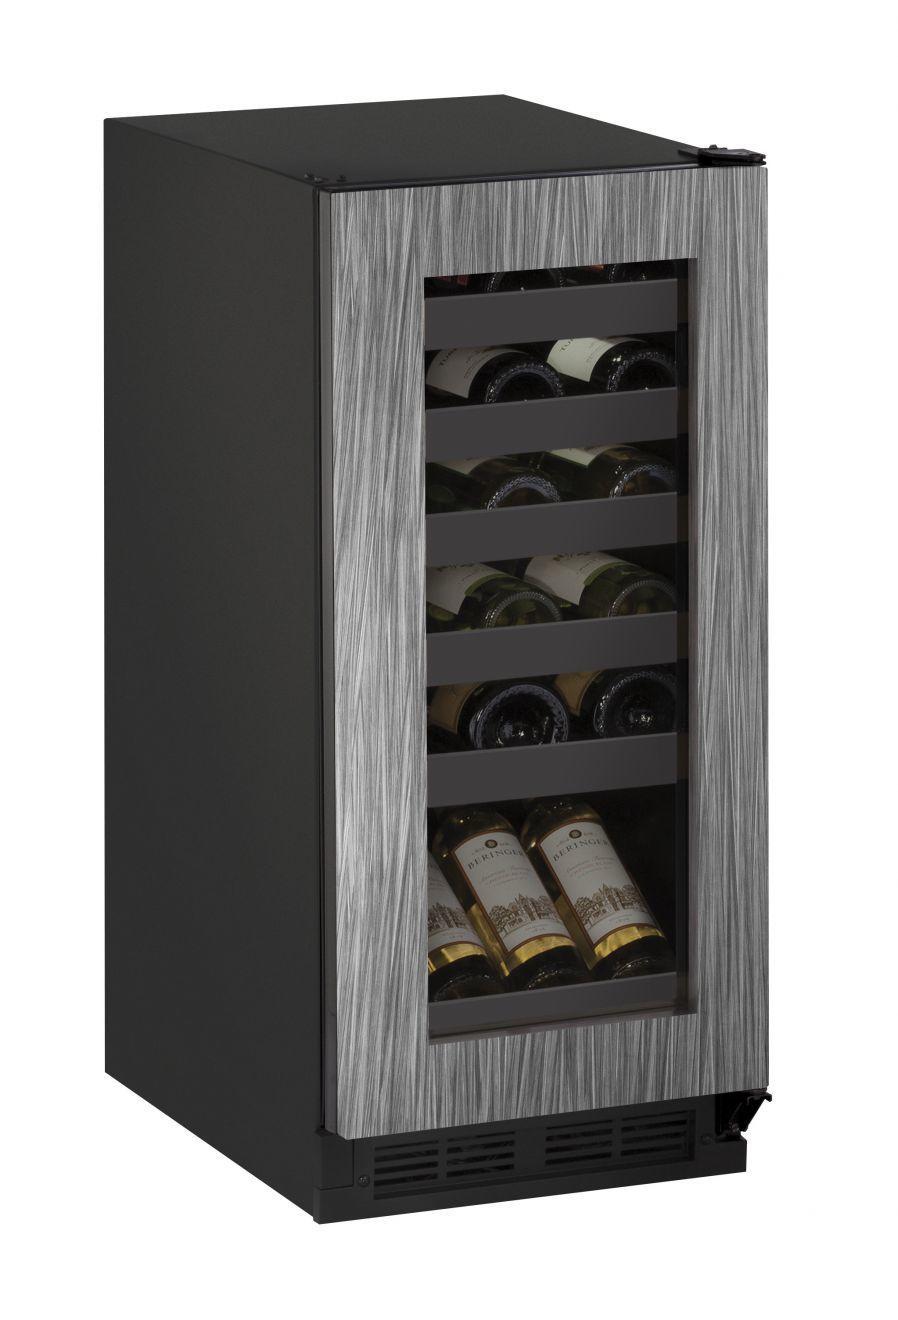 U-Line 1215wc 15" Wine Refrigerator With Integrated Frame Finish (115 V/60 Hz Volts /60 Hz Hz)